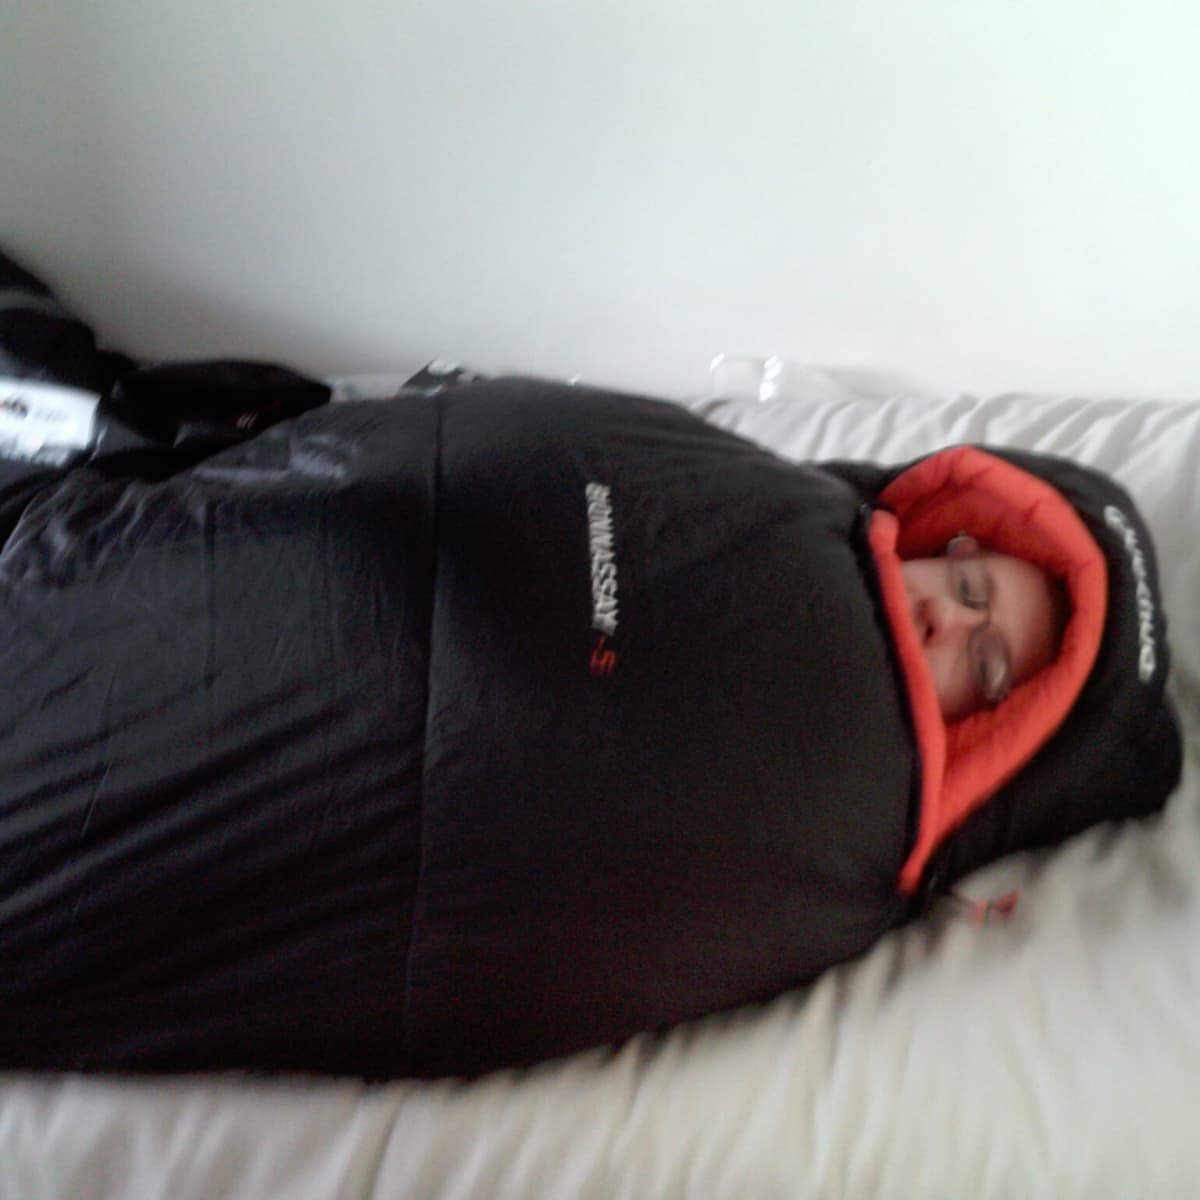 NIRVANA 200 SLEEPING BAG - Everest Outdoor Store